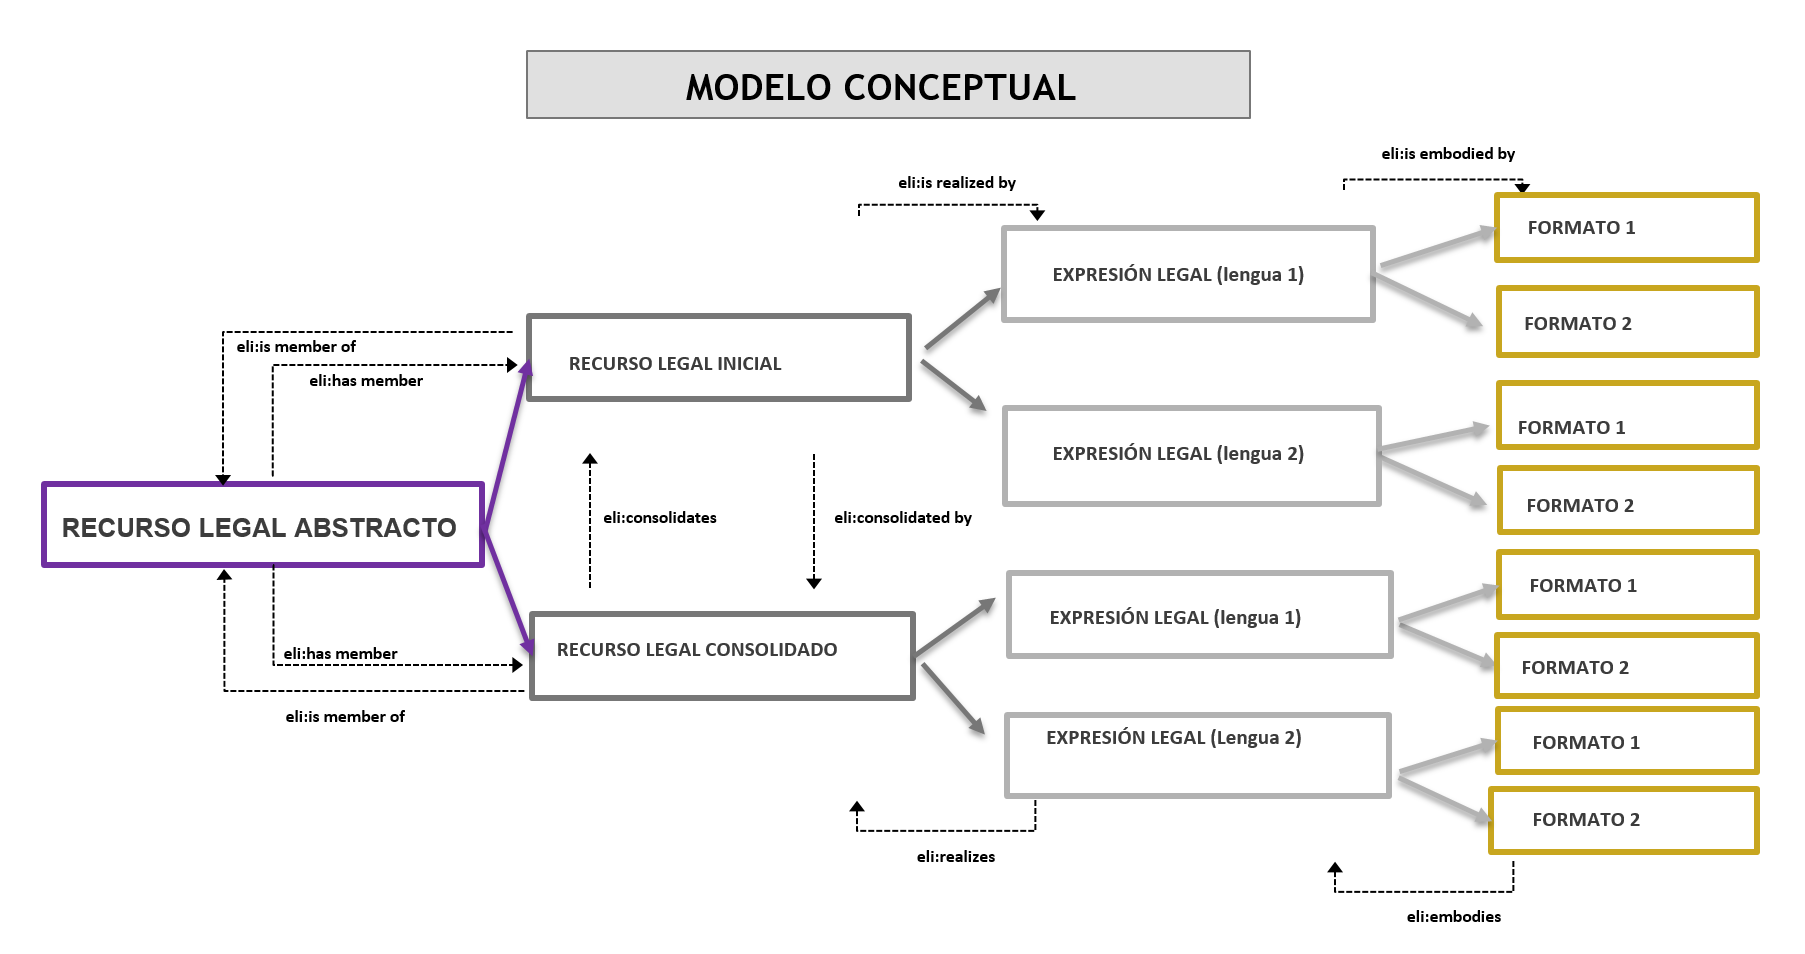 modelo conceptual del ELI